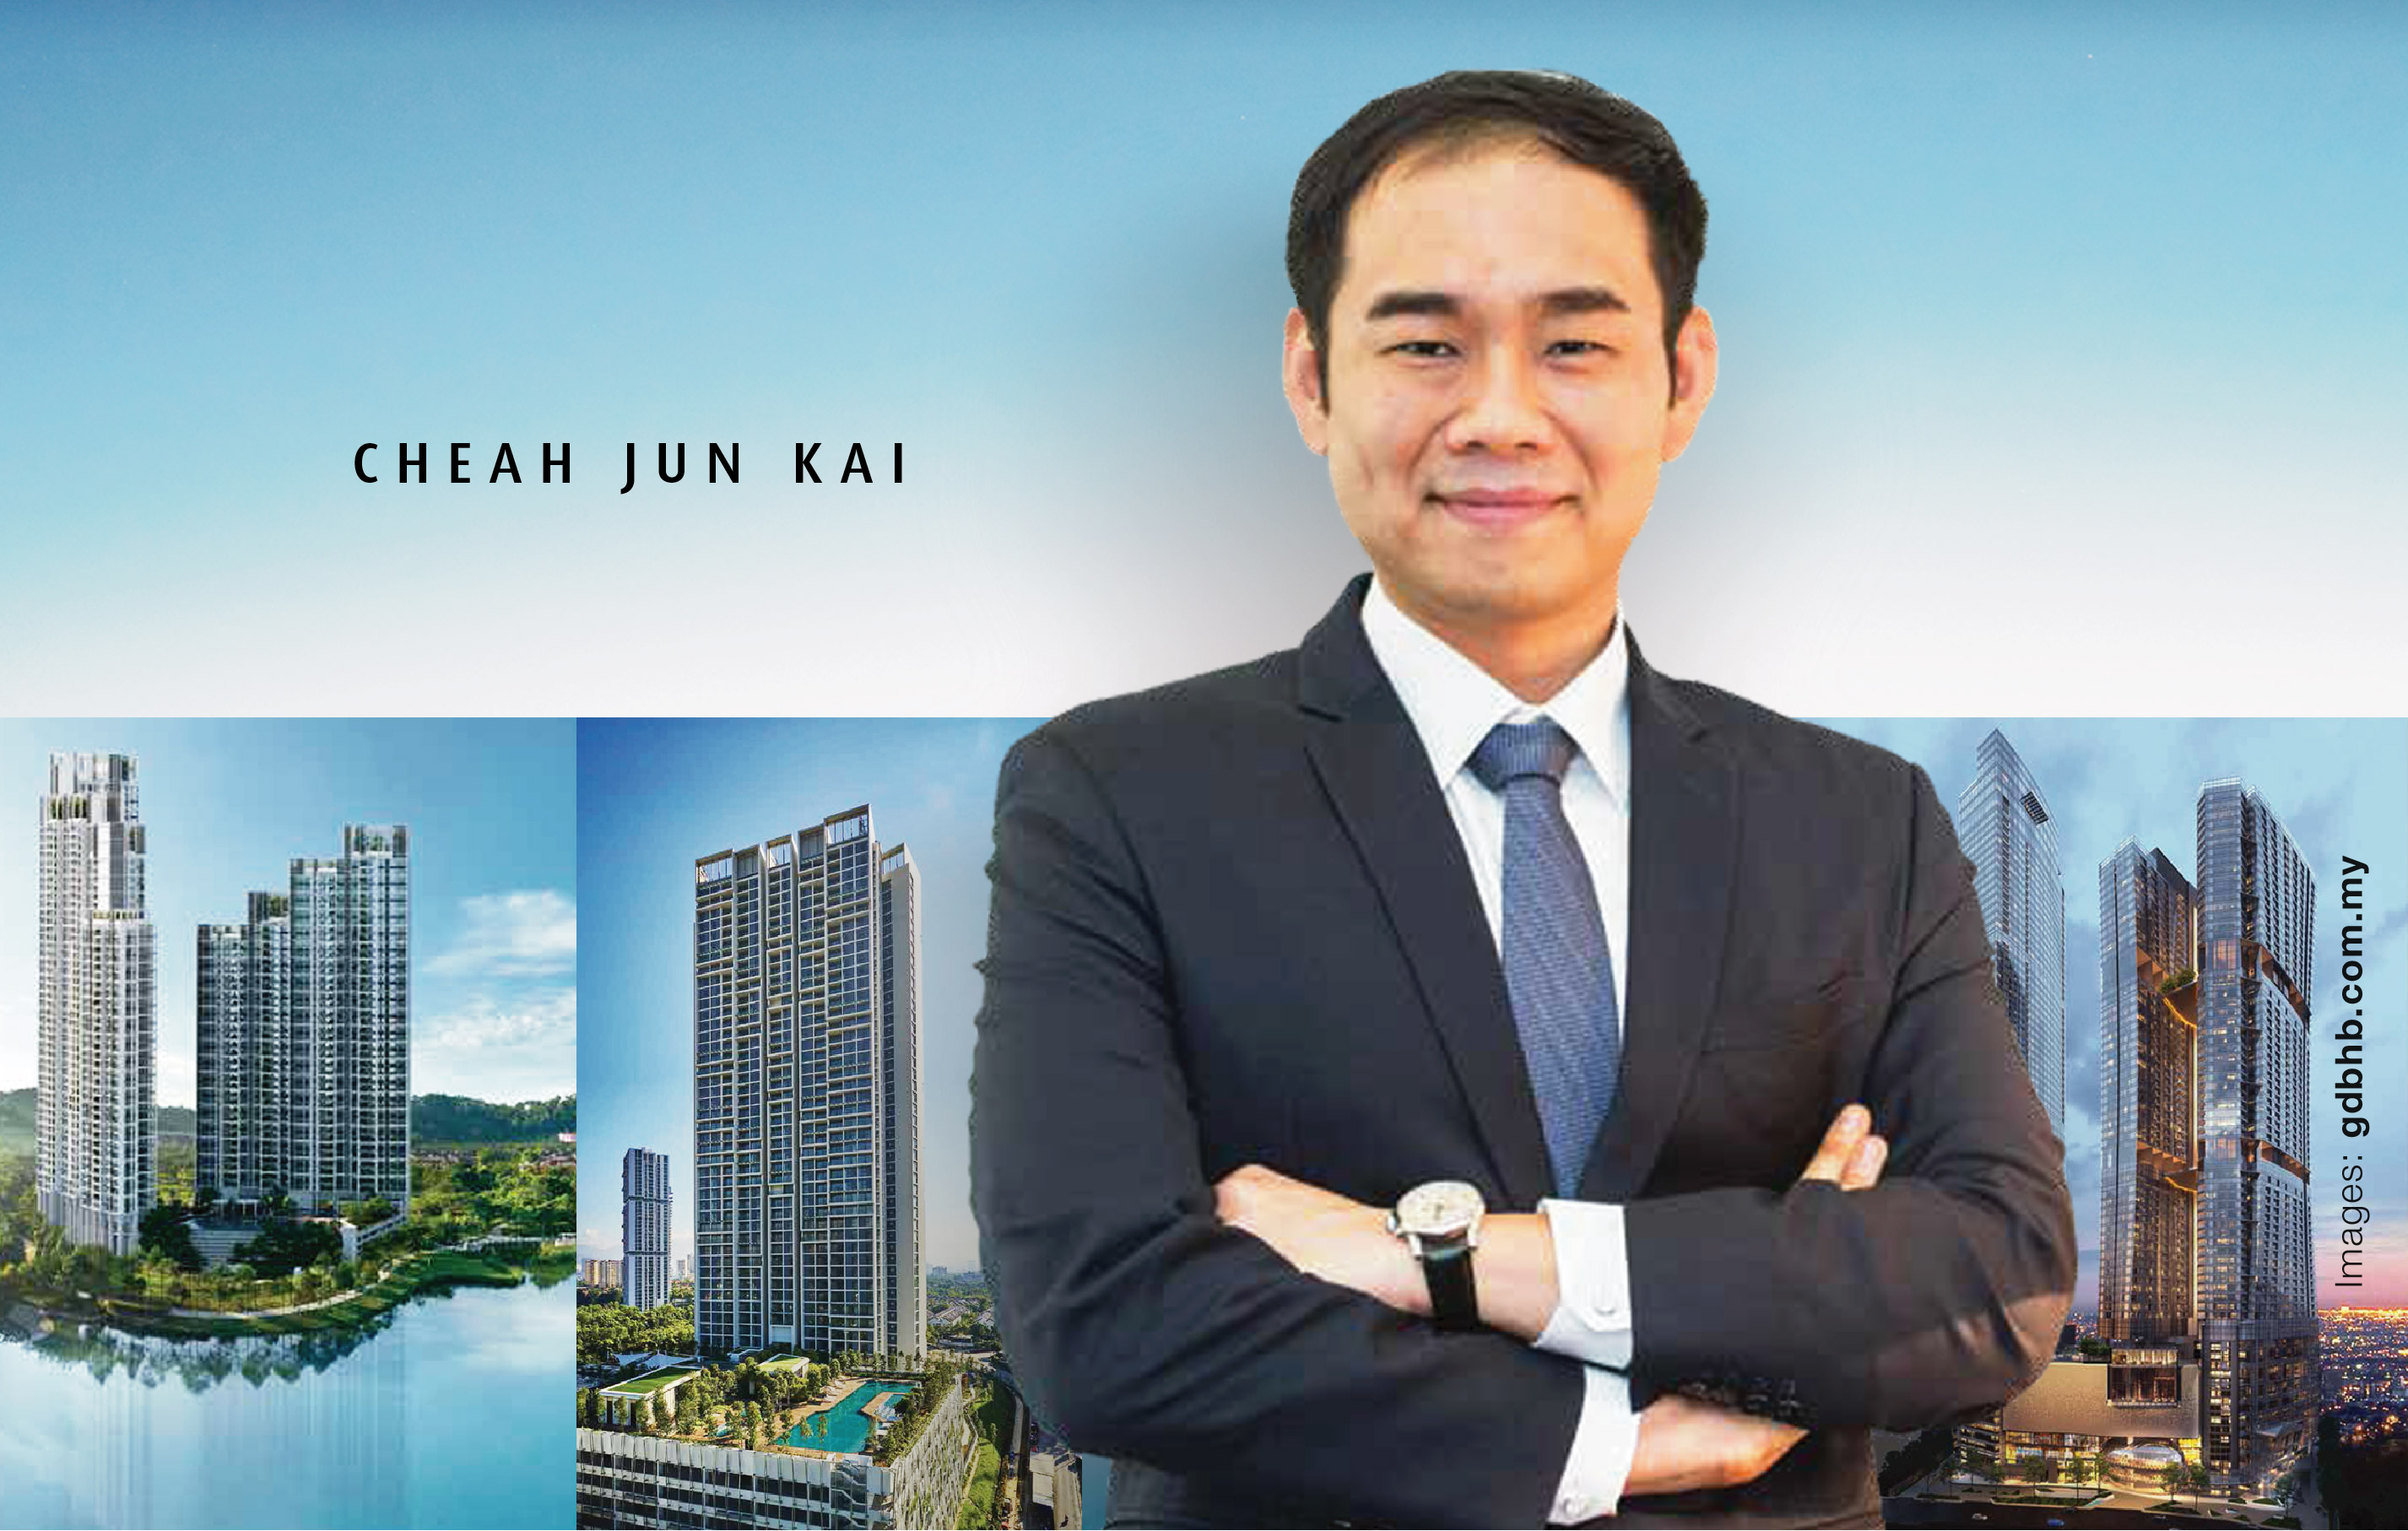 GDB Holdings' Executive Director, Cheah Jun Kai, 35, is son of founder Cheah Ham Cheia